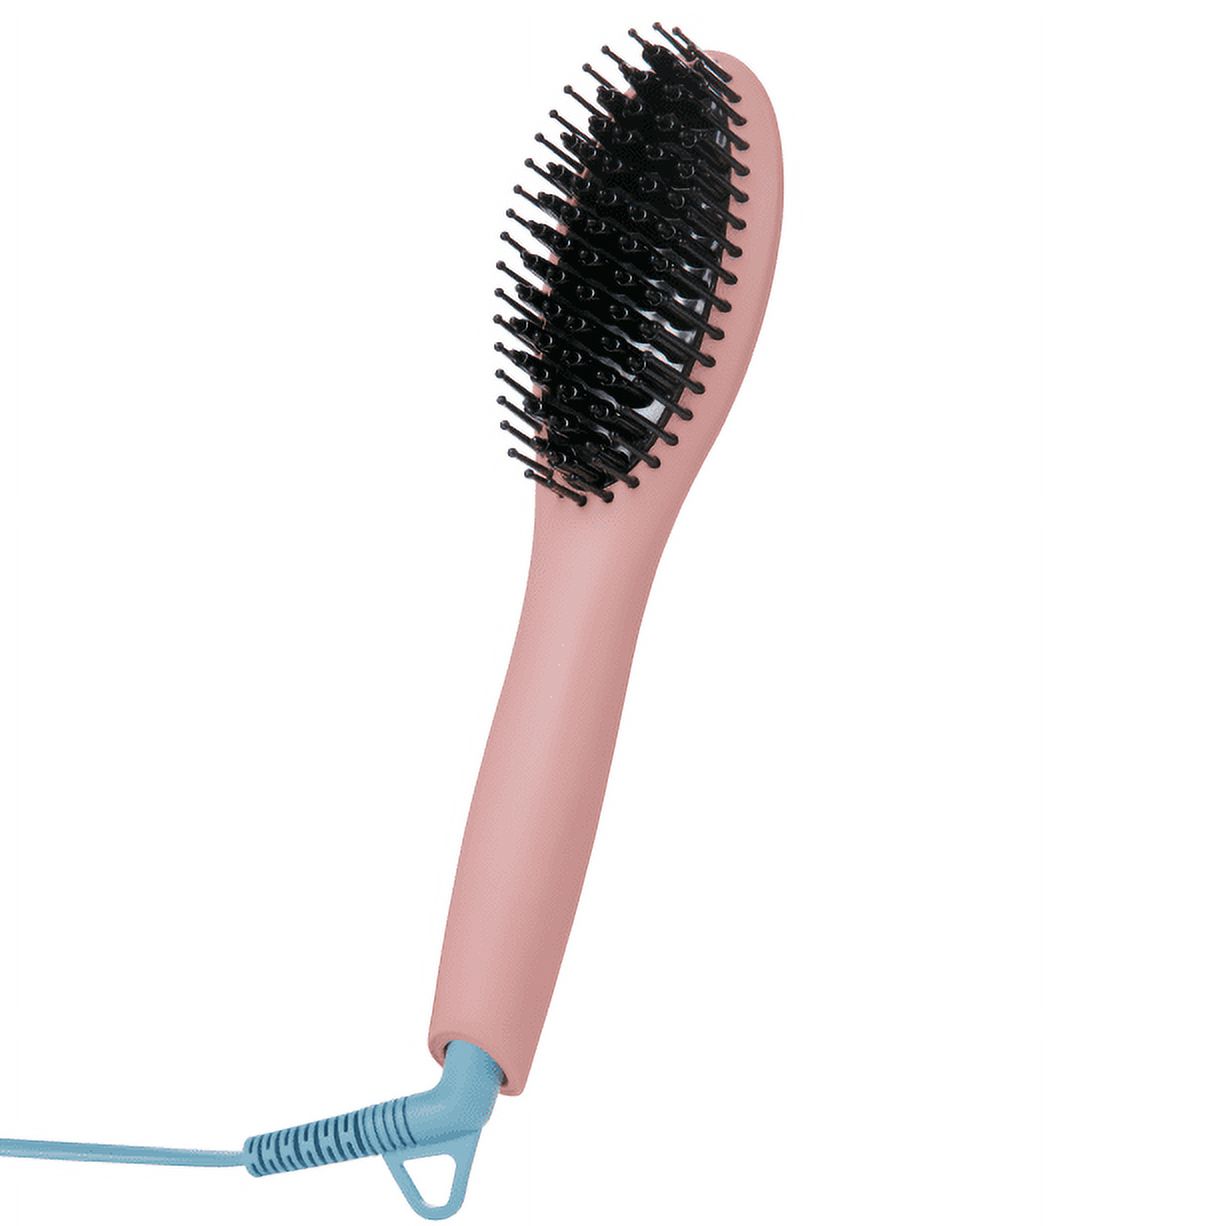 FLOWER Ceramic Hair Straightening Brush, Pink - image 1 of 11